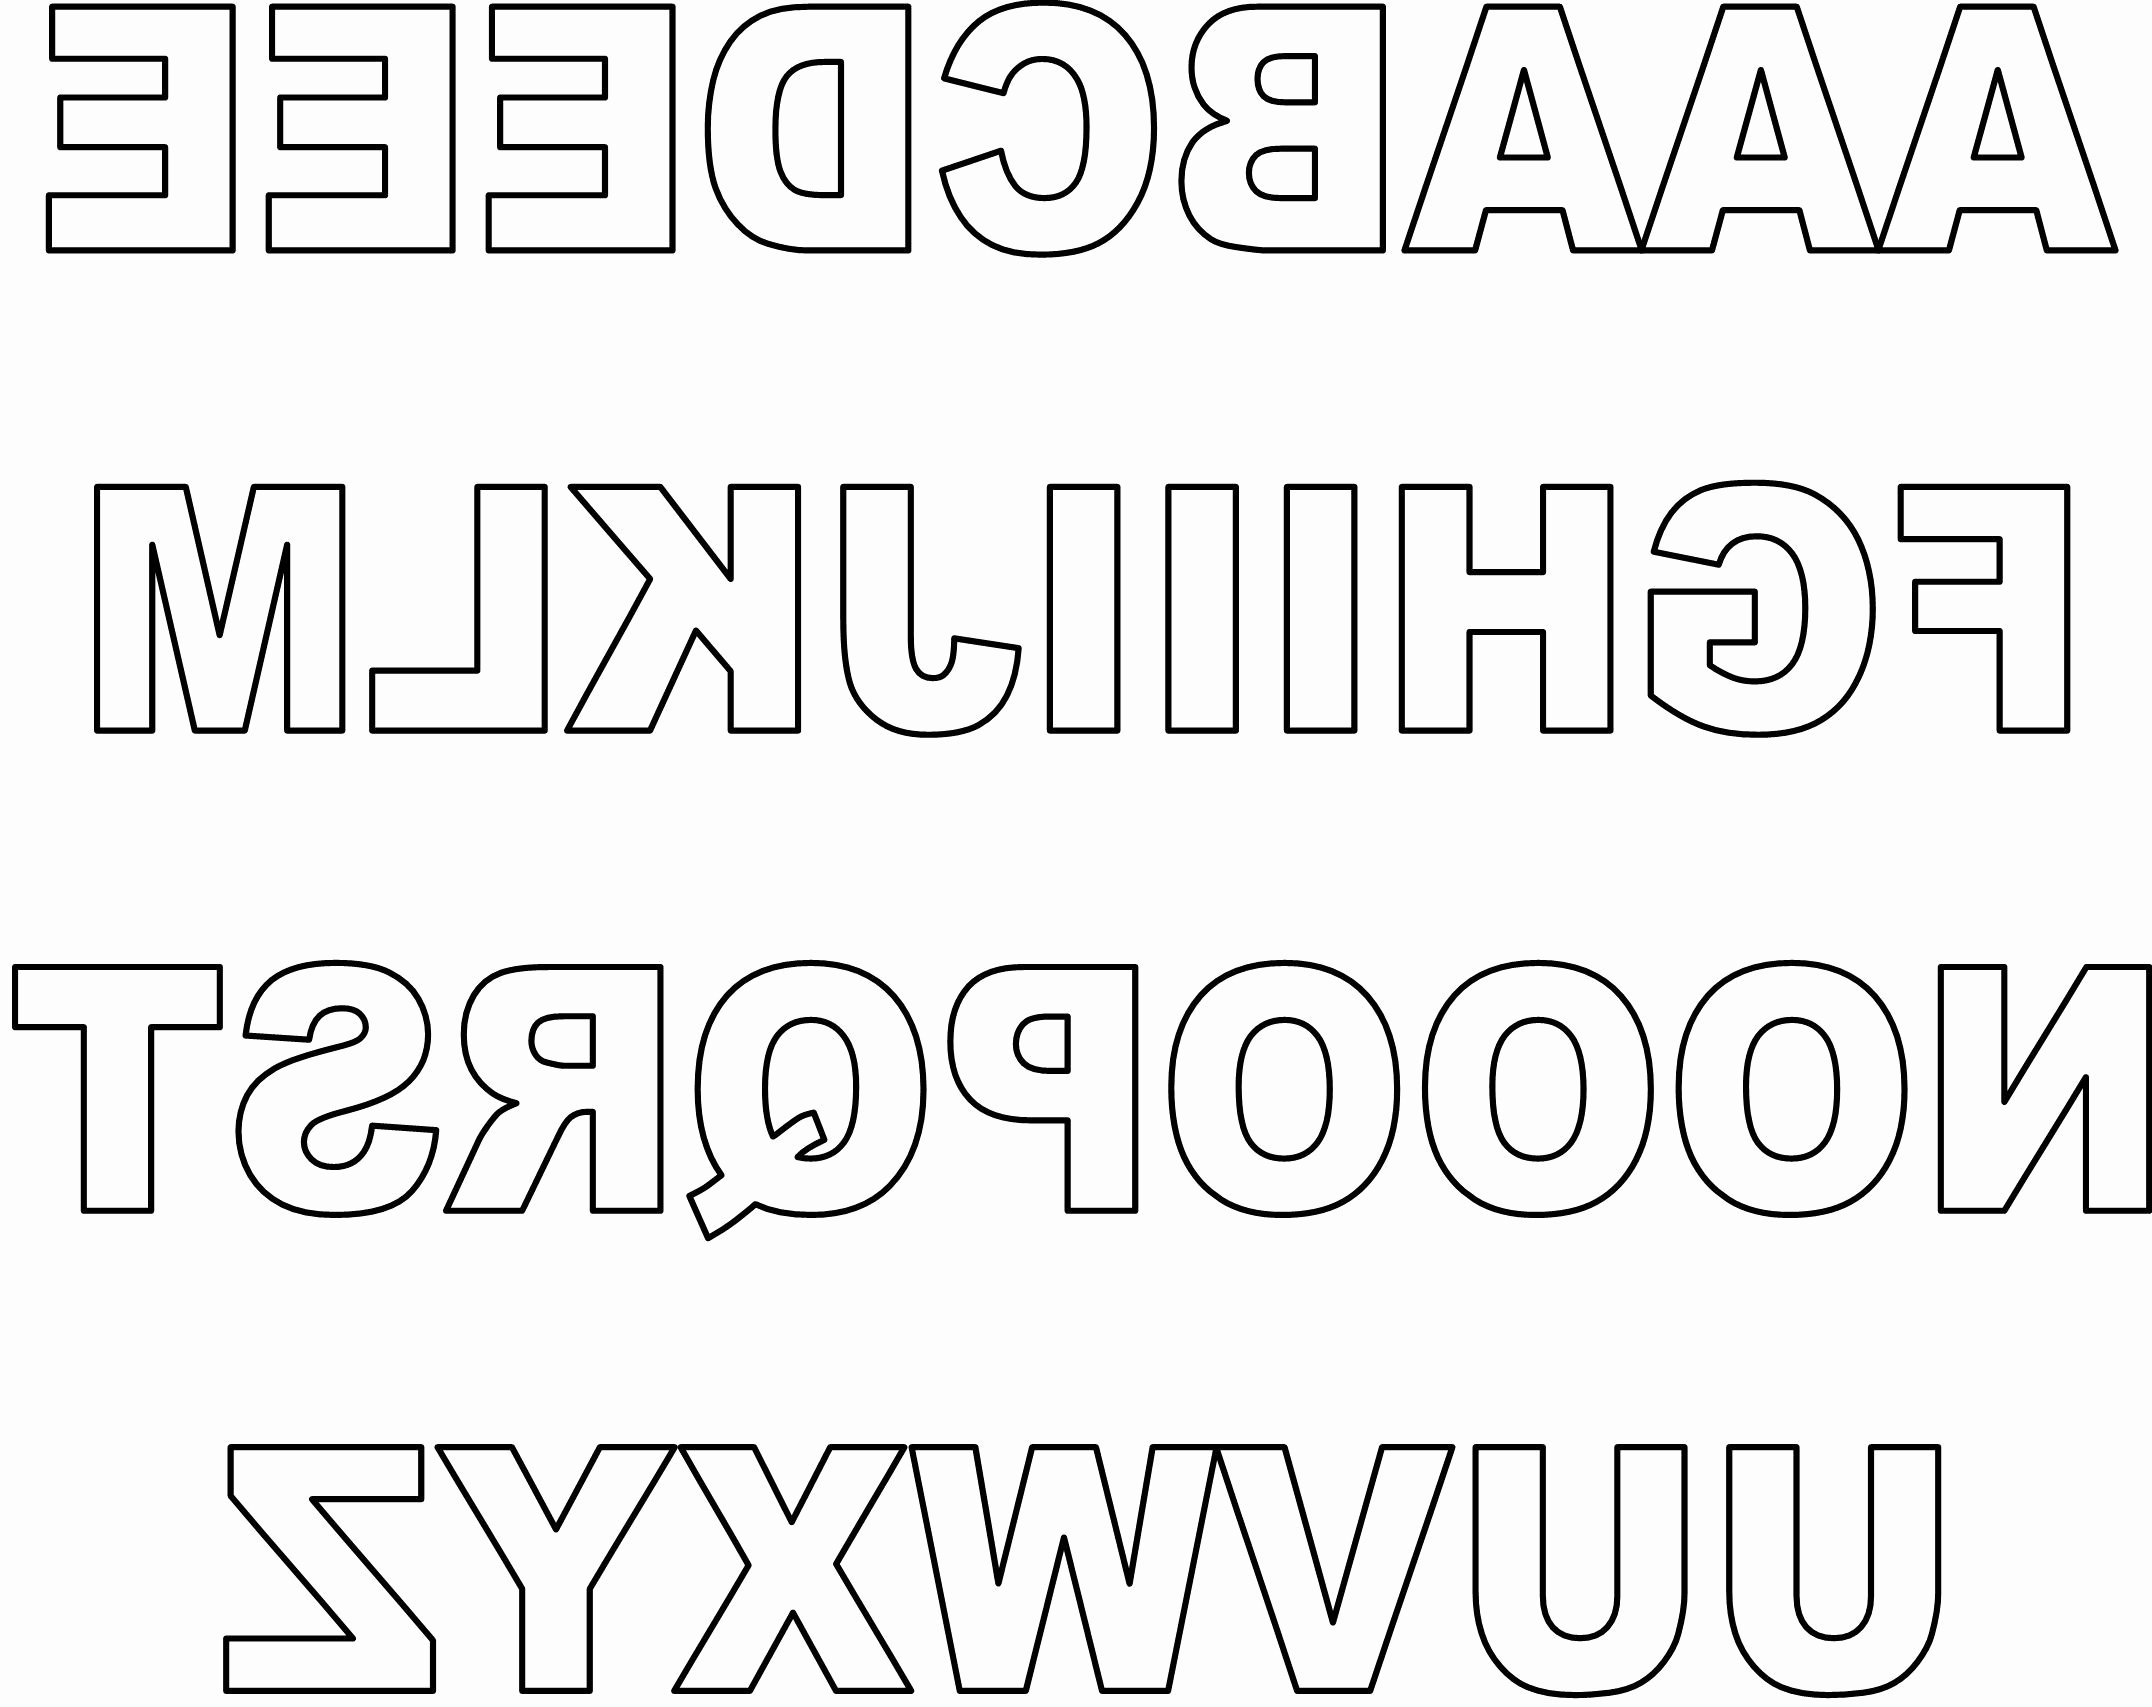 Alphabet Cut Out Letters Elegant Scrapbooking Reversed Block Upper Case Letters for Titles